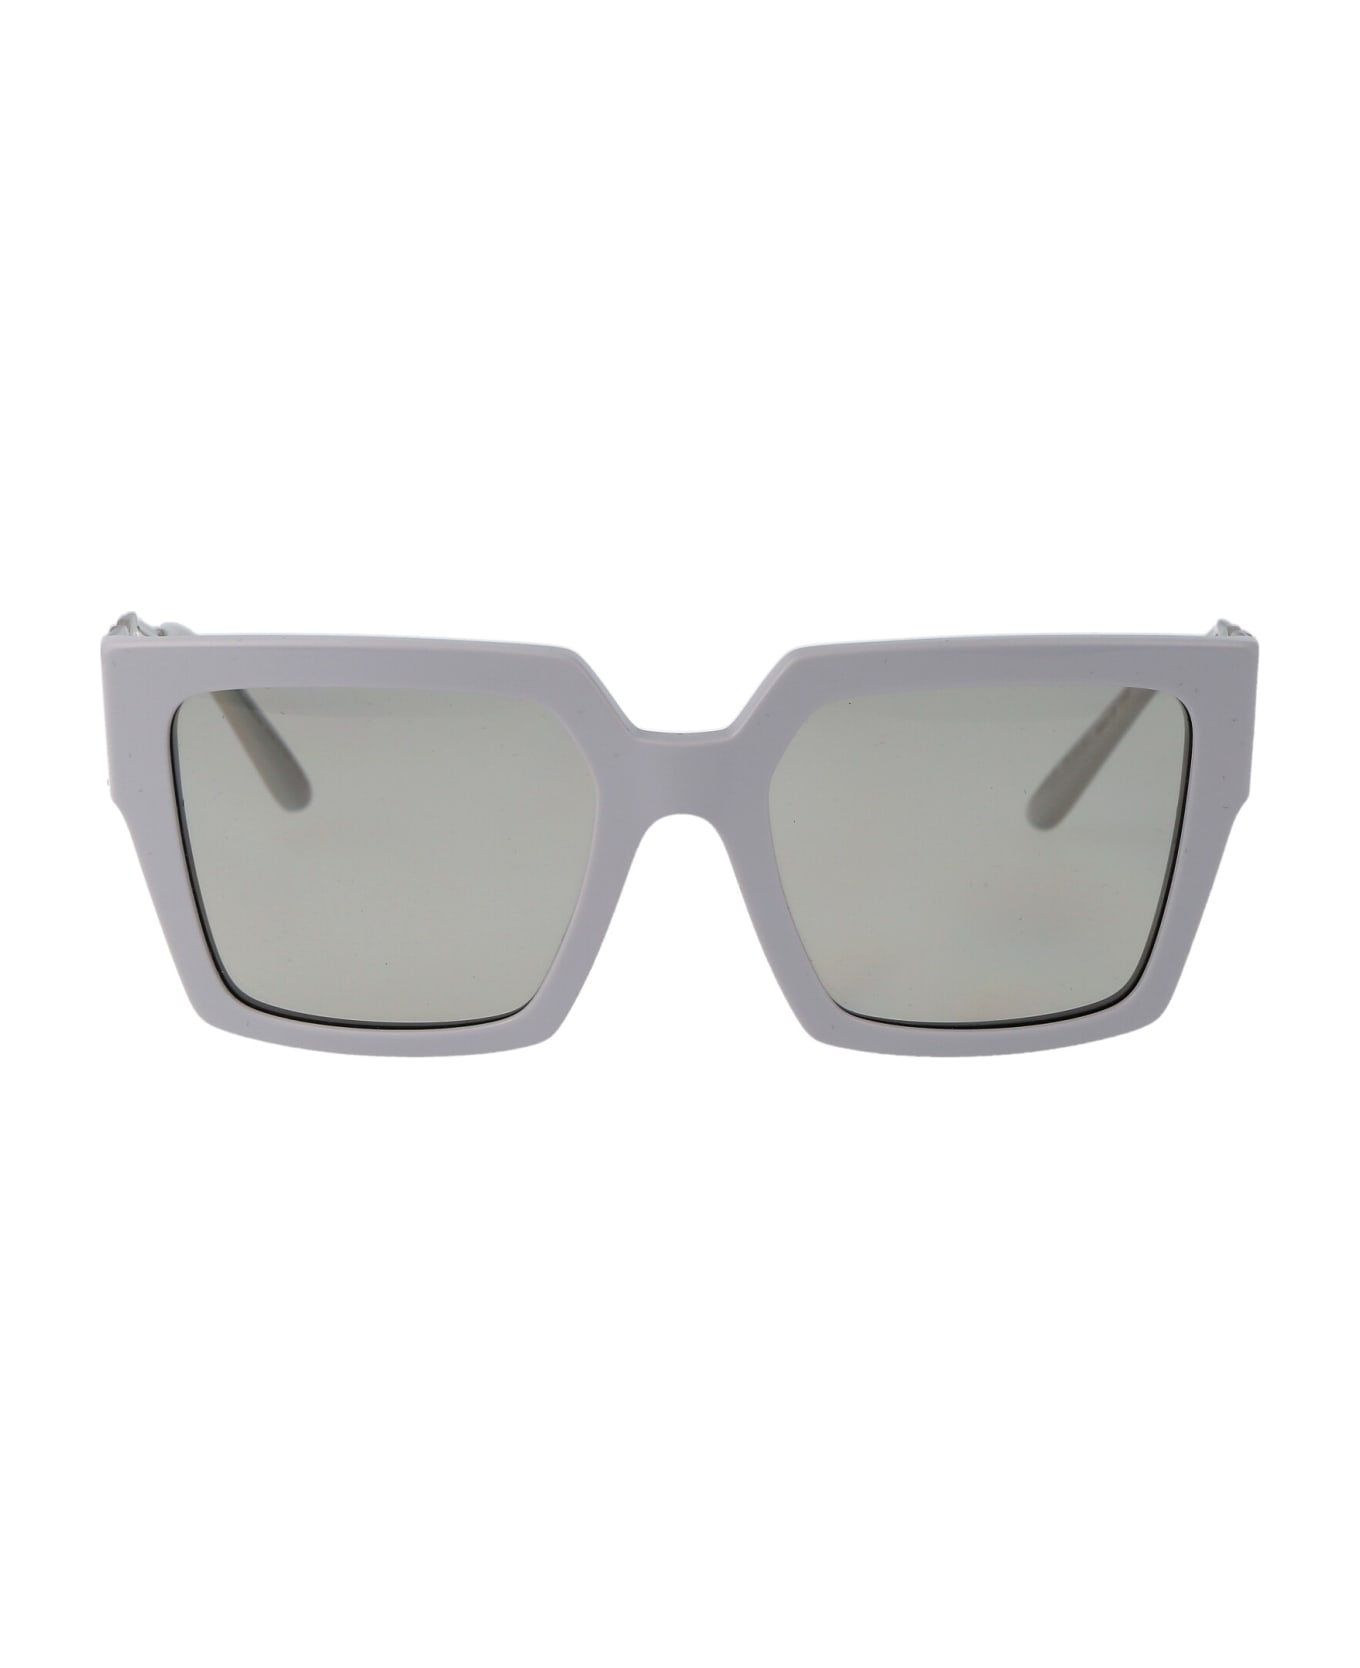 Dolce & Gabbana Eyewear 0dg4446b Sunglasses - 341887 Light Grey